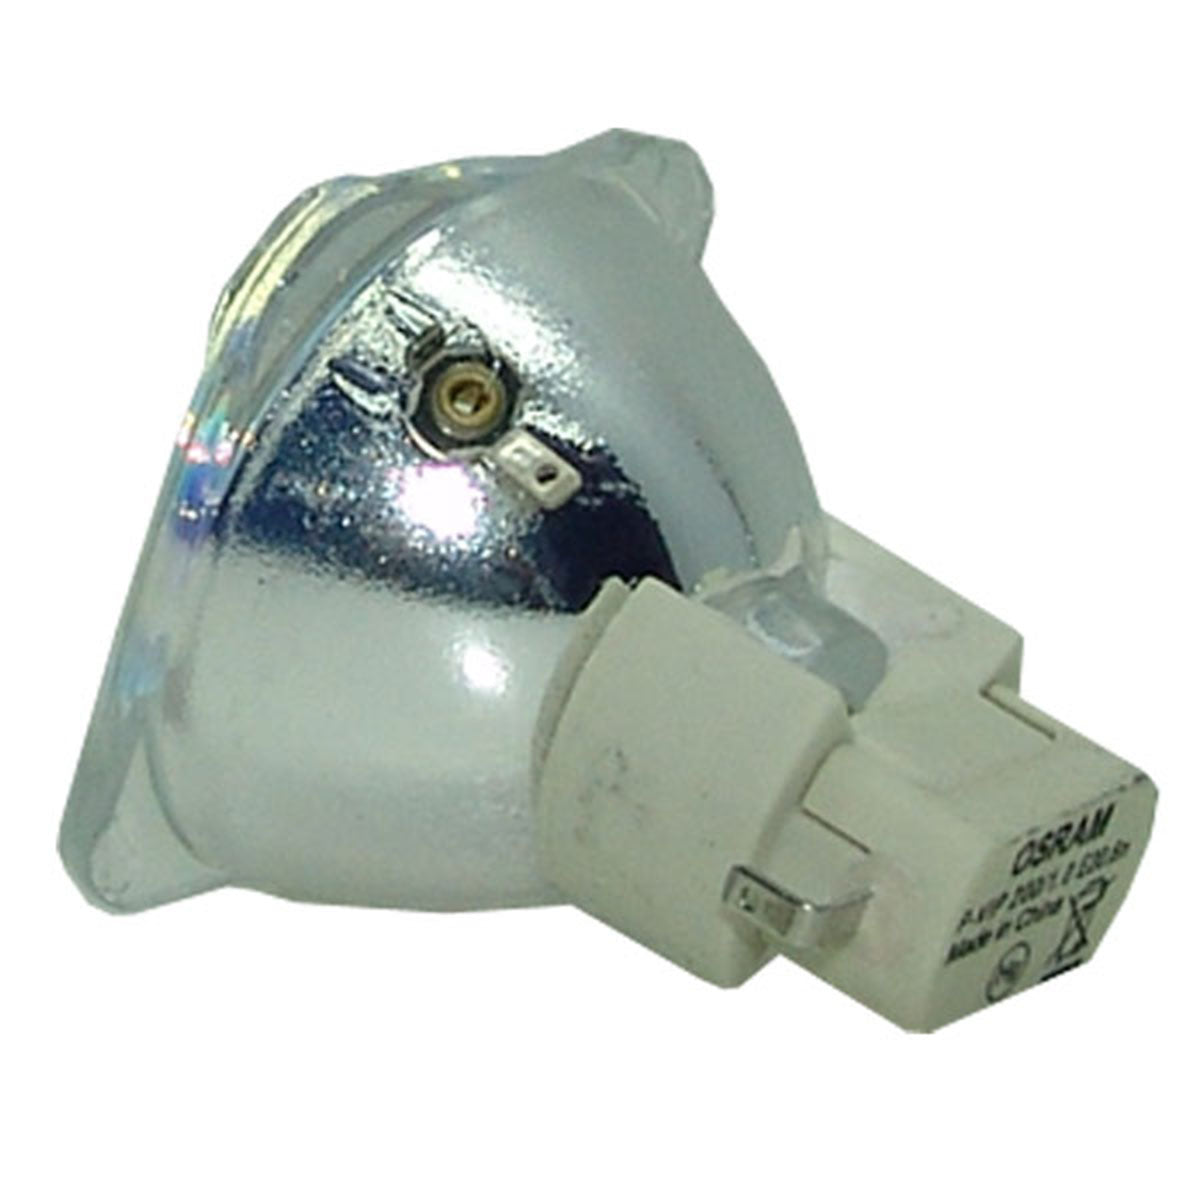 Premier P8384-1001 Osram Projector Bare Lamp